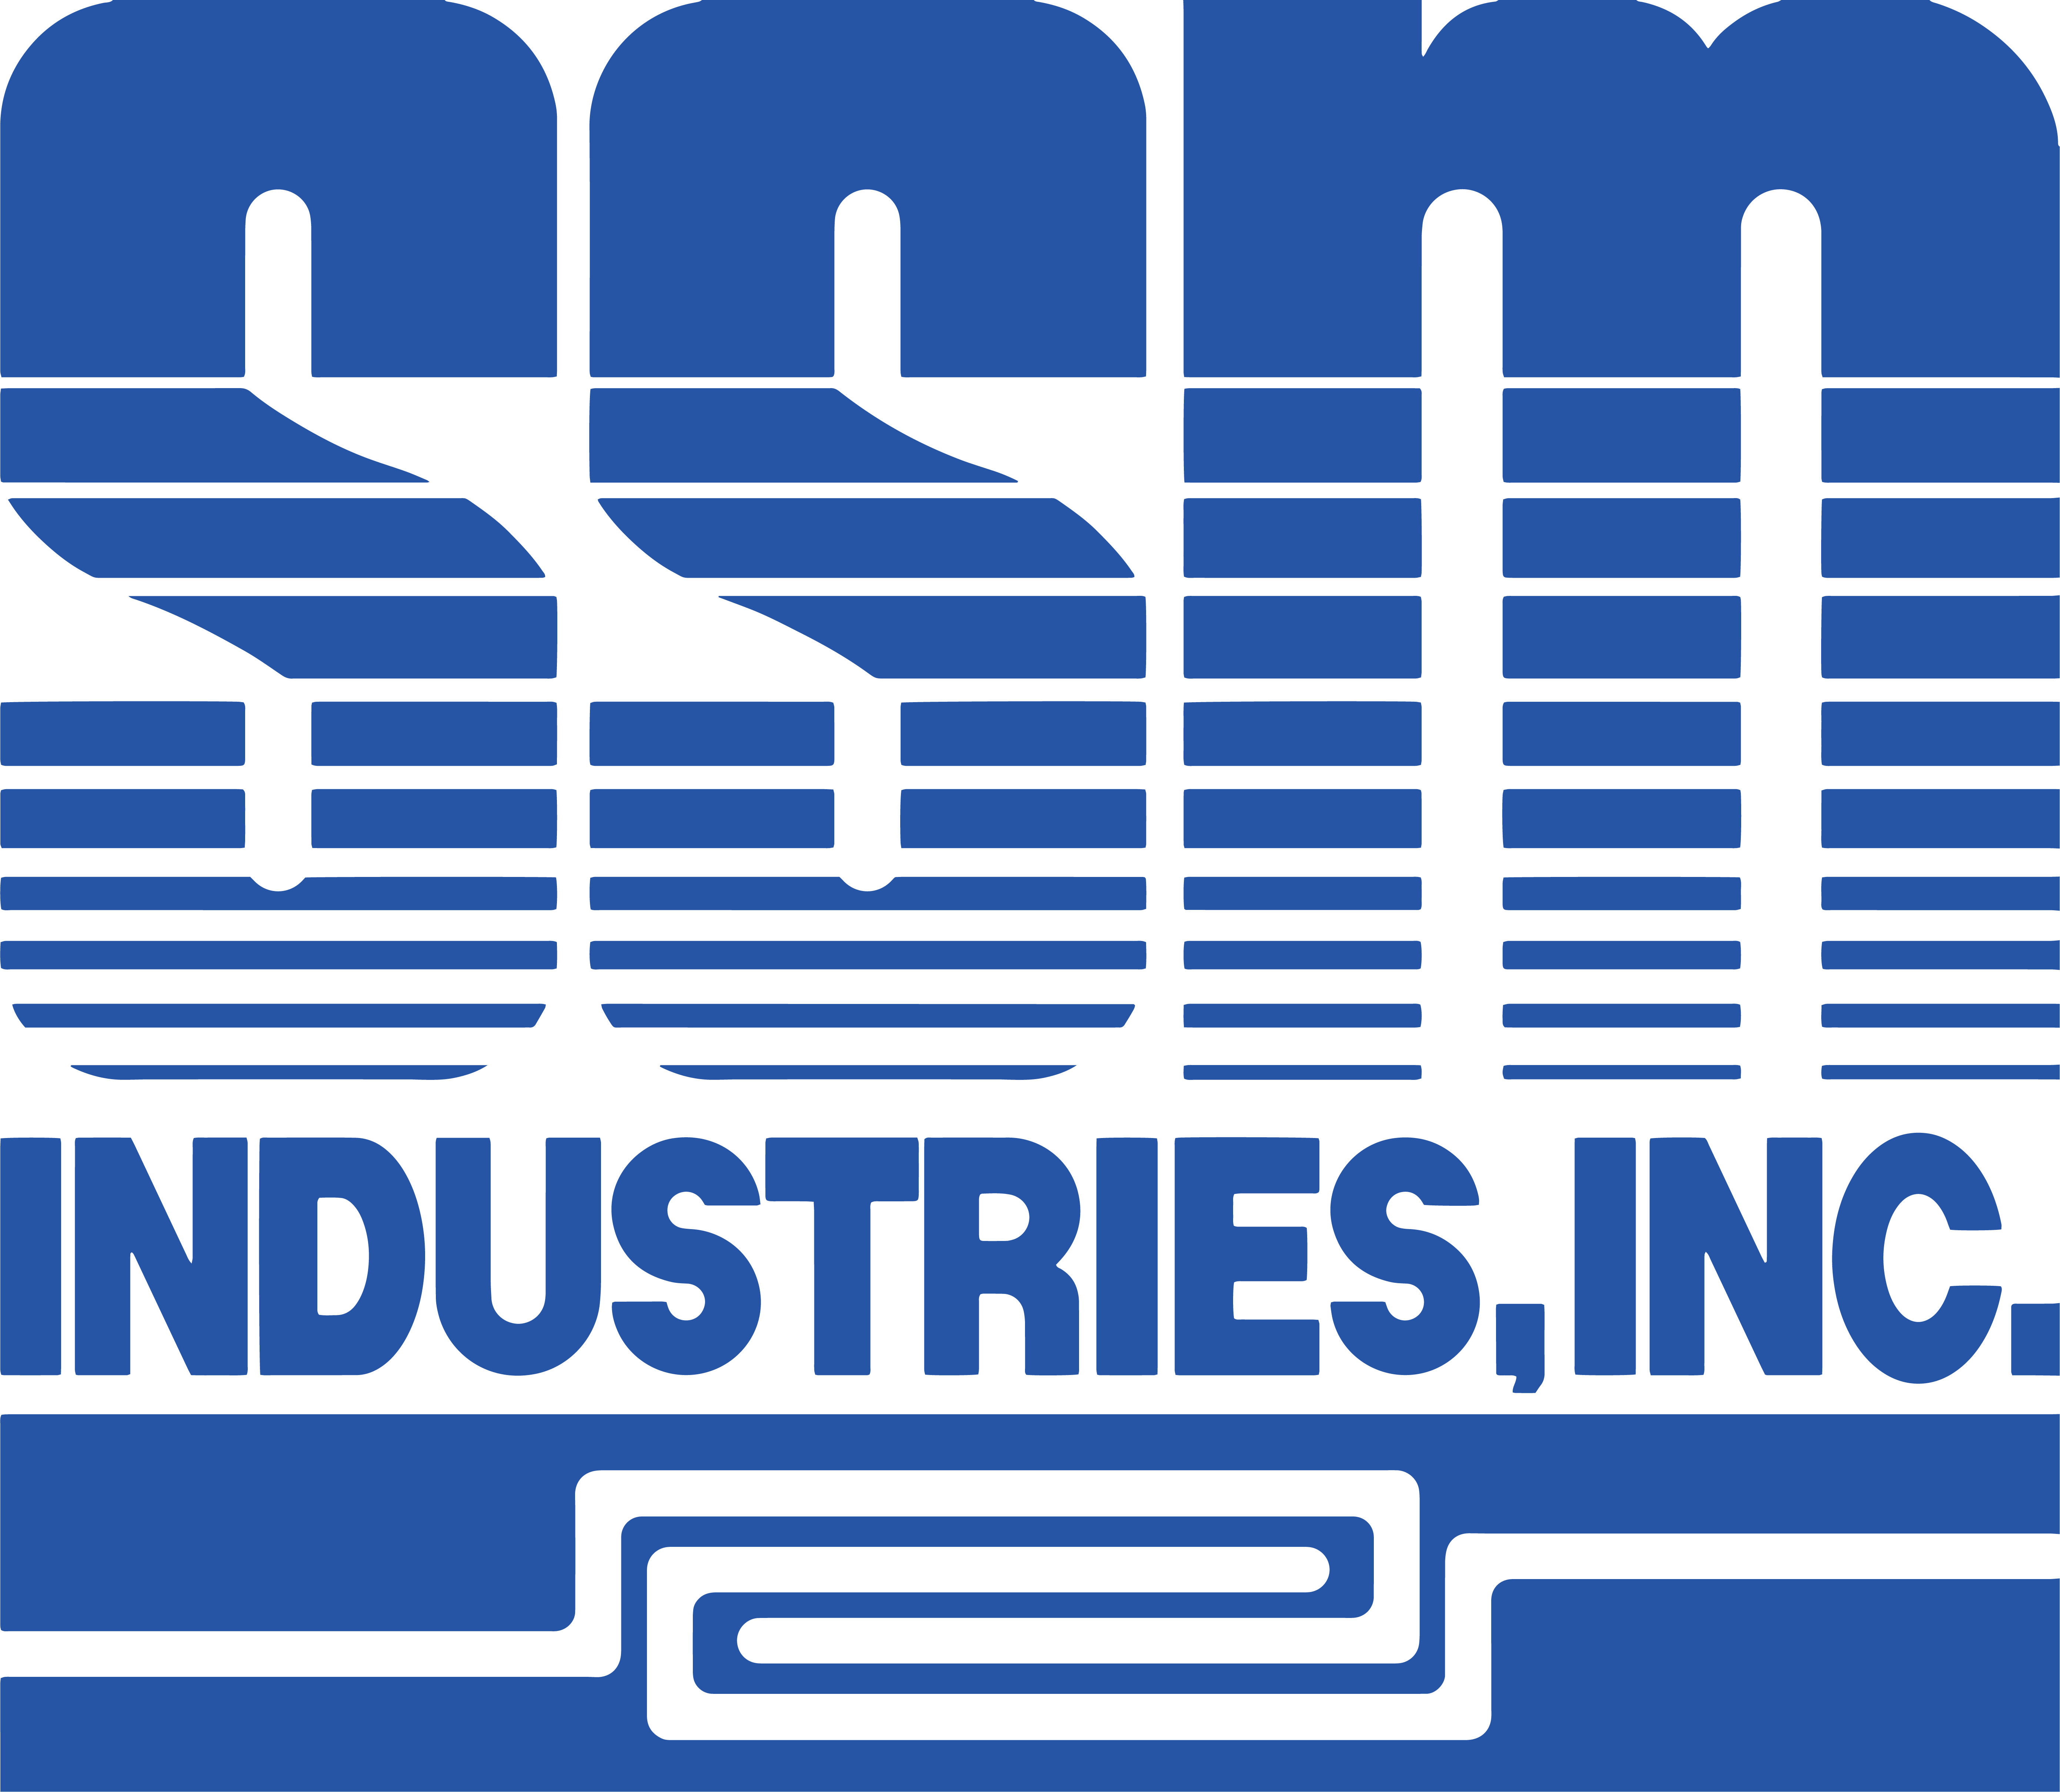 SSM Industries